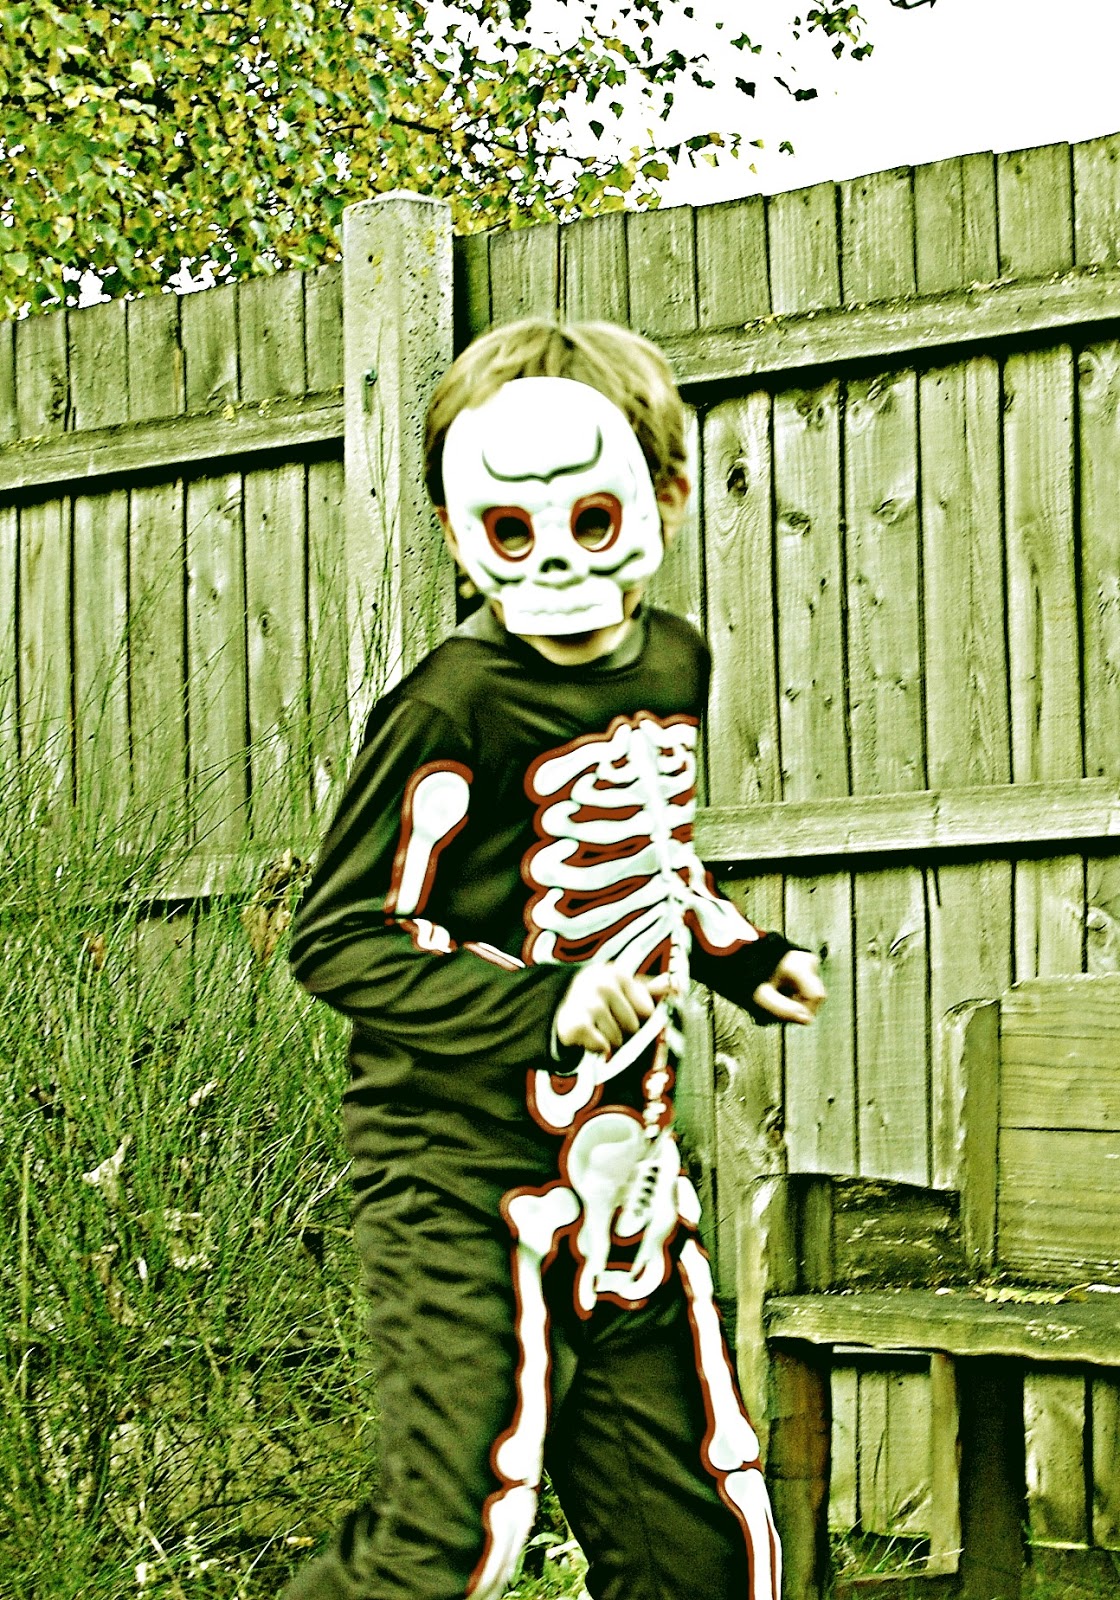 Asda Skeleton Costume